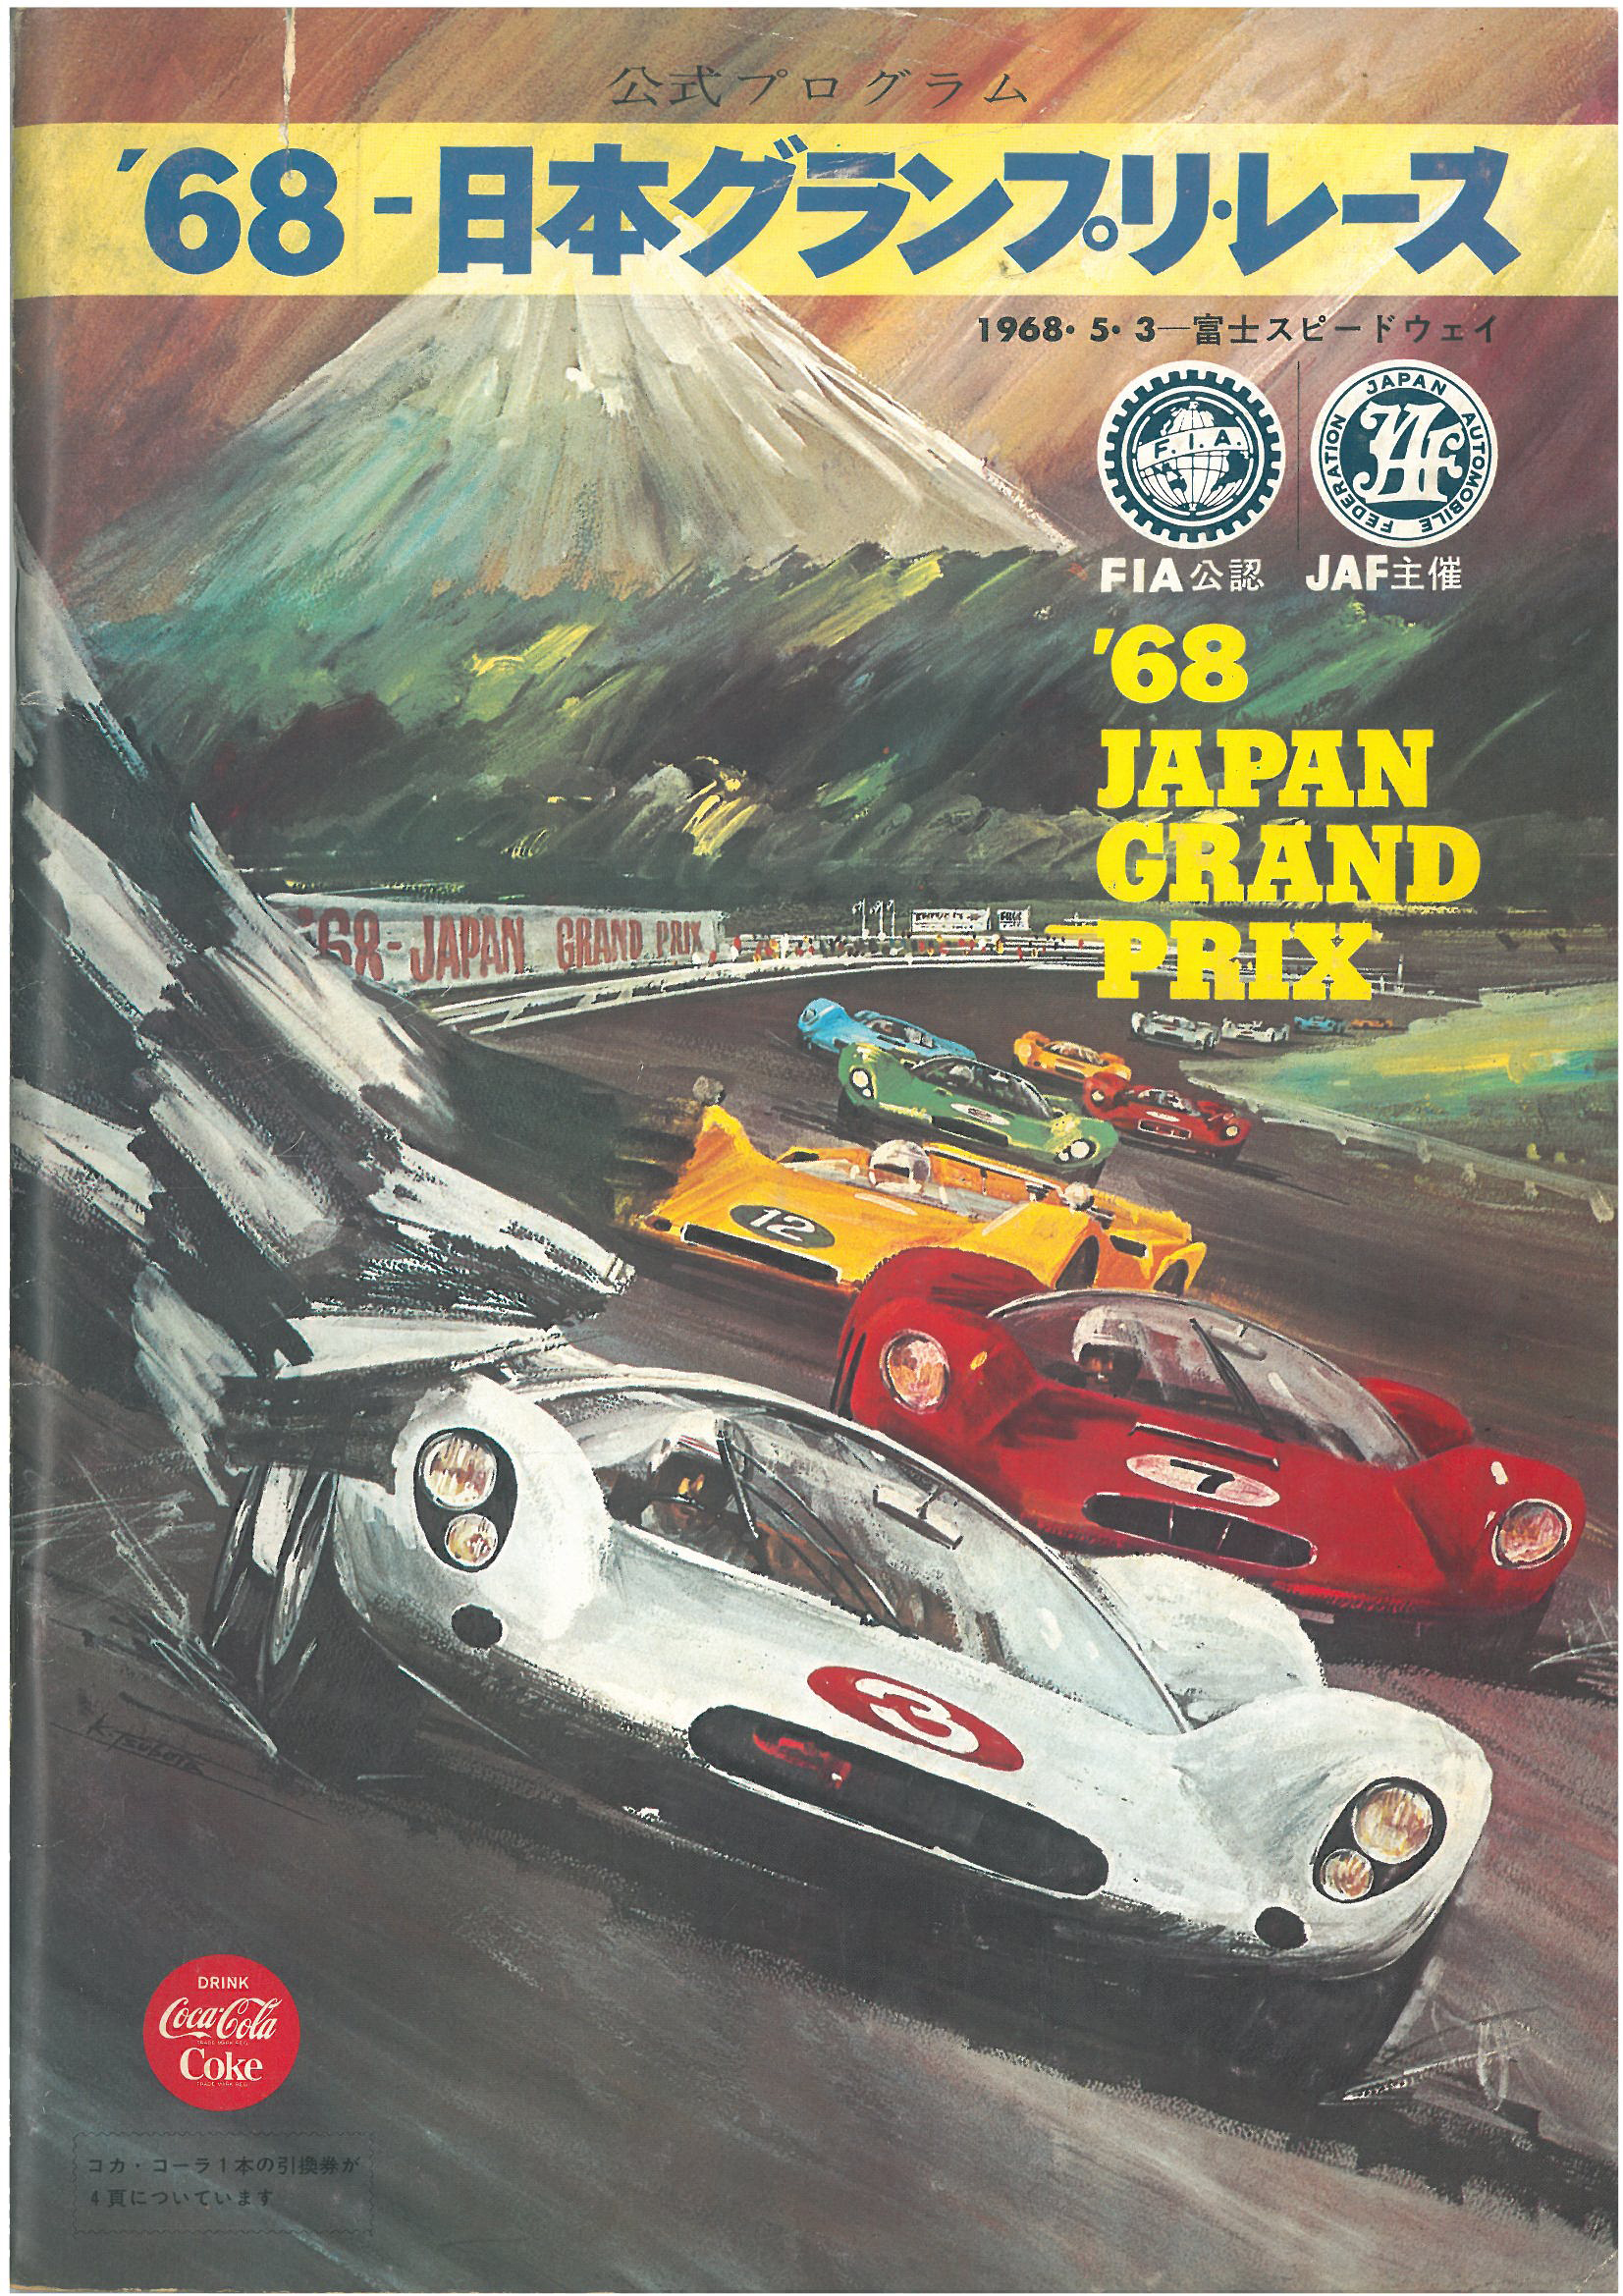 The Japan Grand Prix at Fuji, Chapter III: 1968 – Super GT World